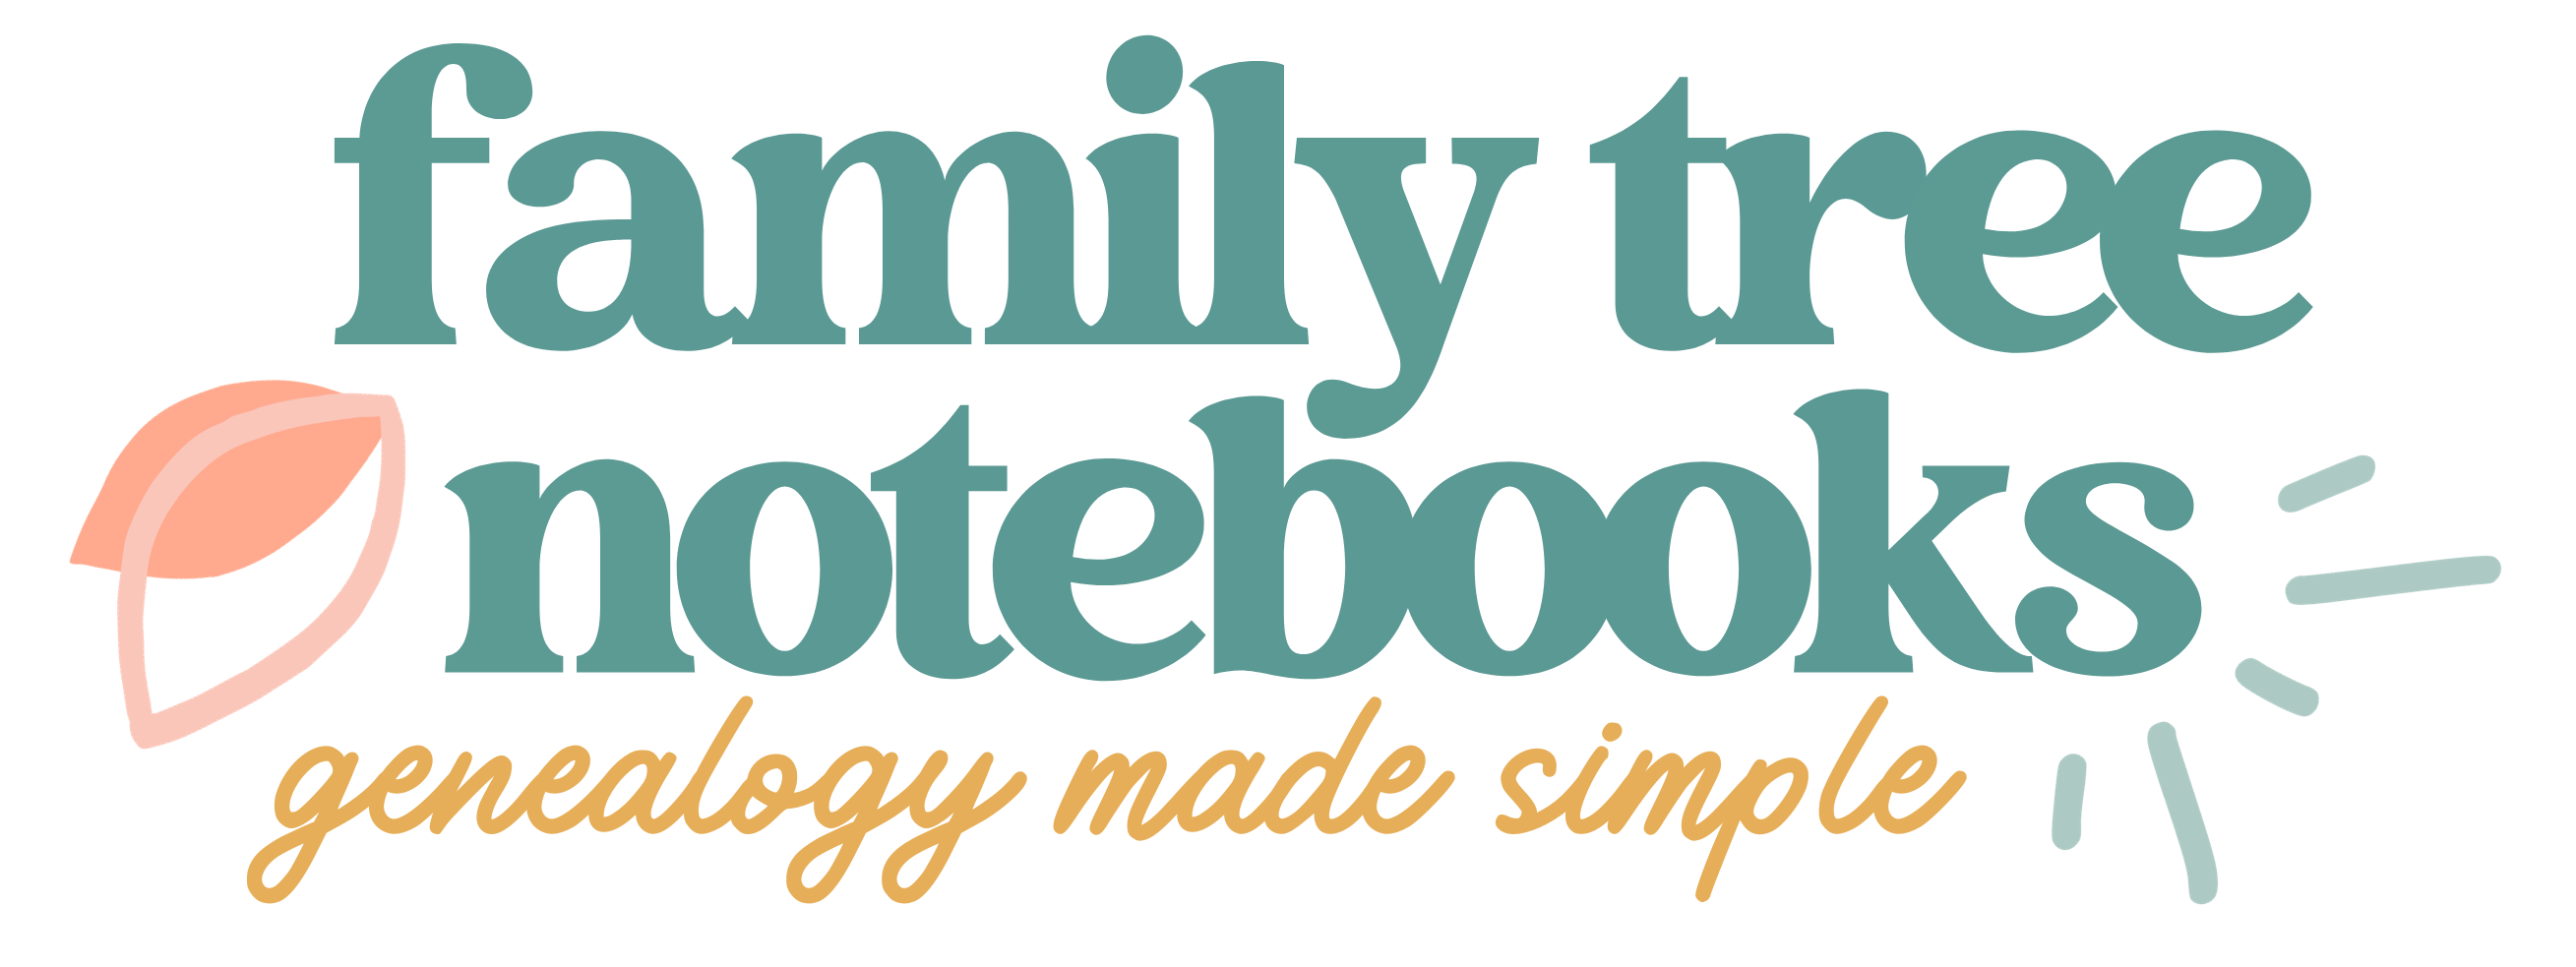 The Book: Family Tree Notebooks 101 (DIGITAL COPY)